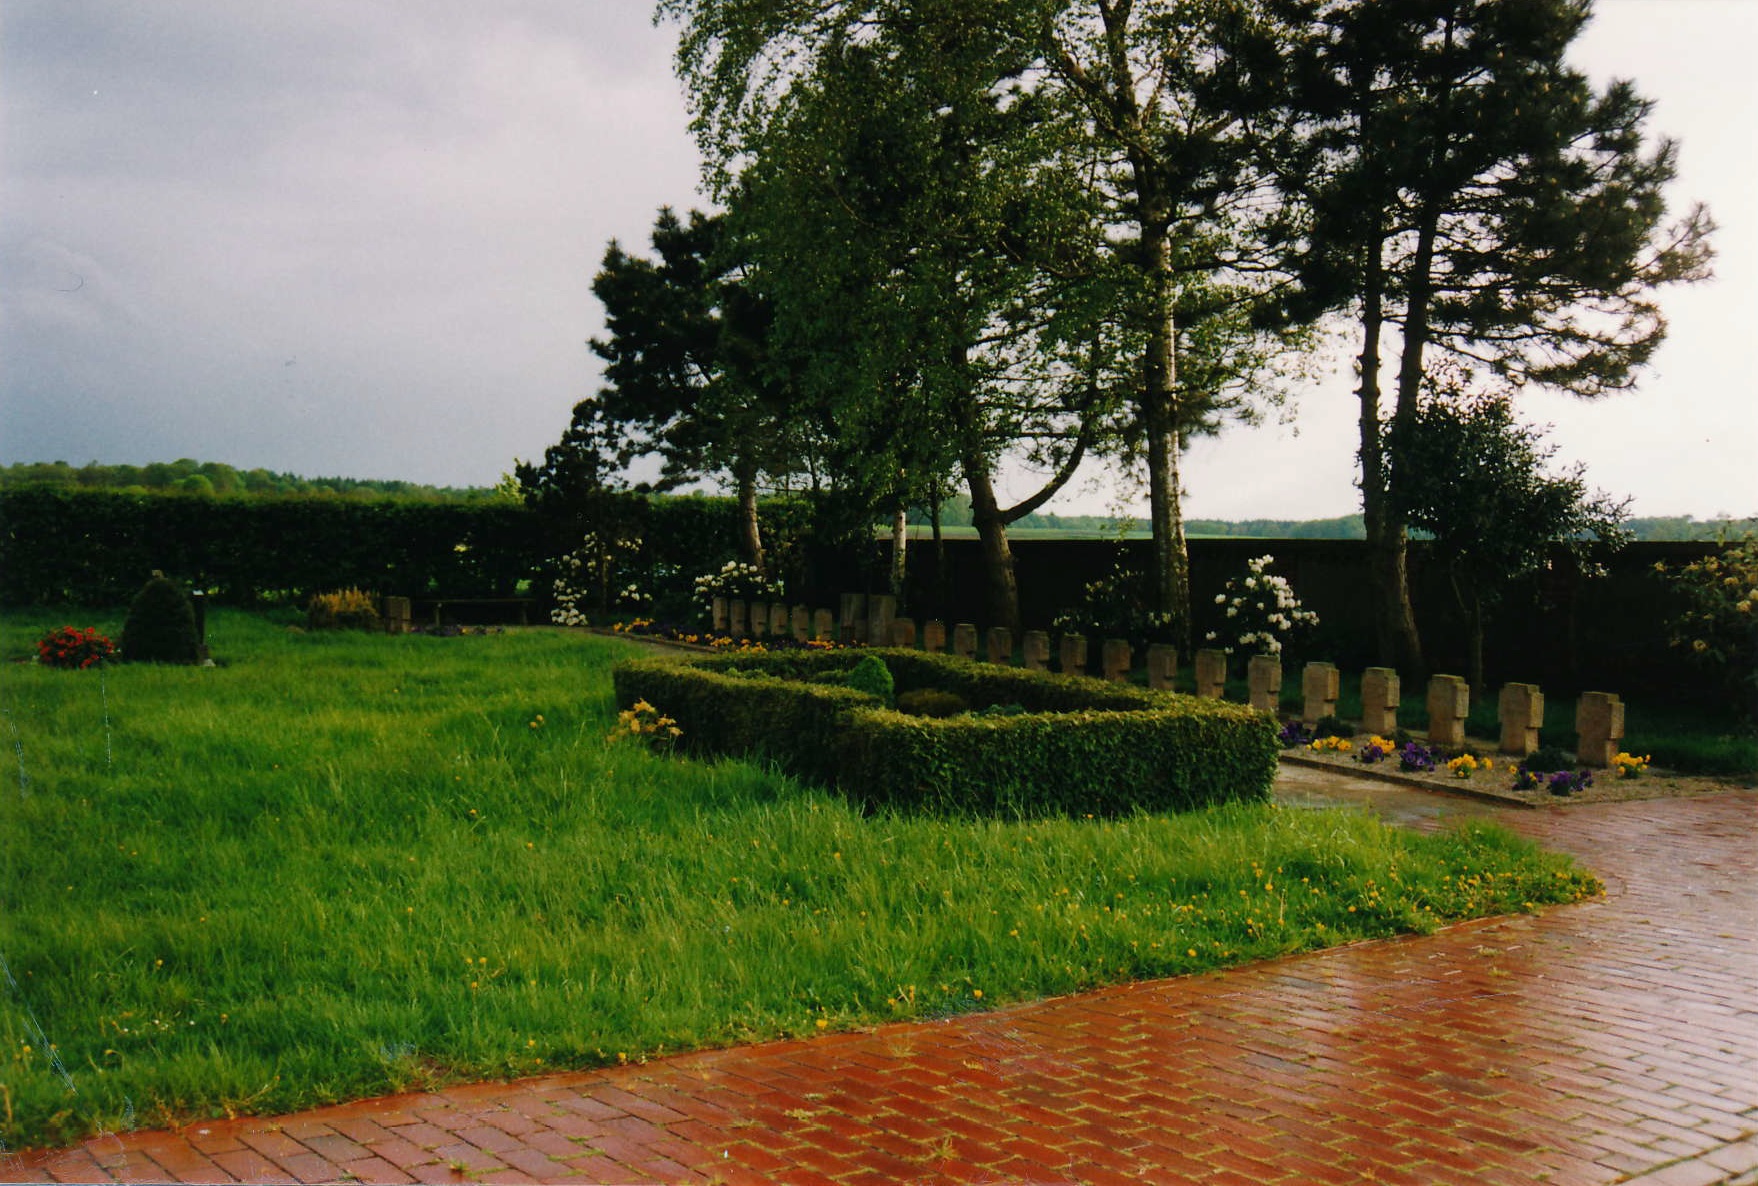 Buriel ground of soldiers that died during World War II